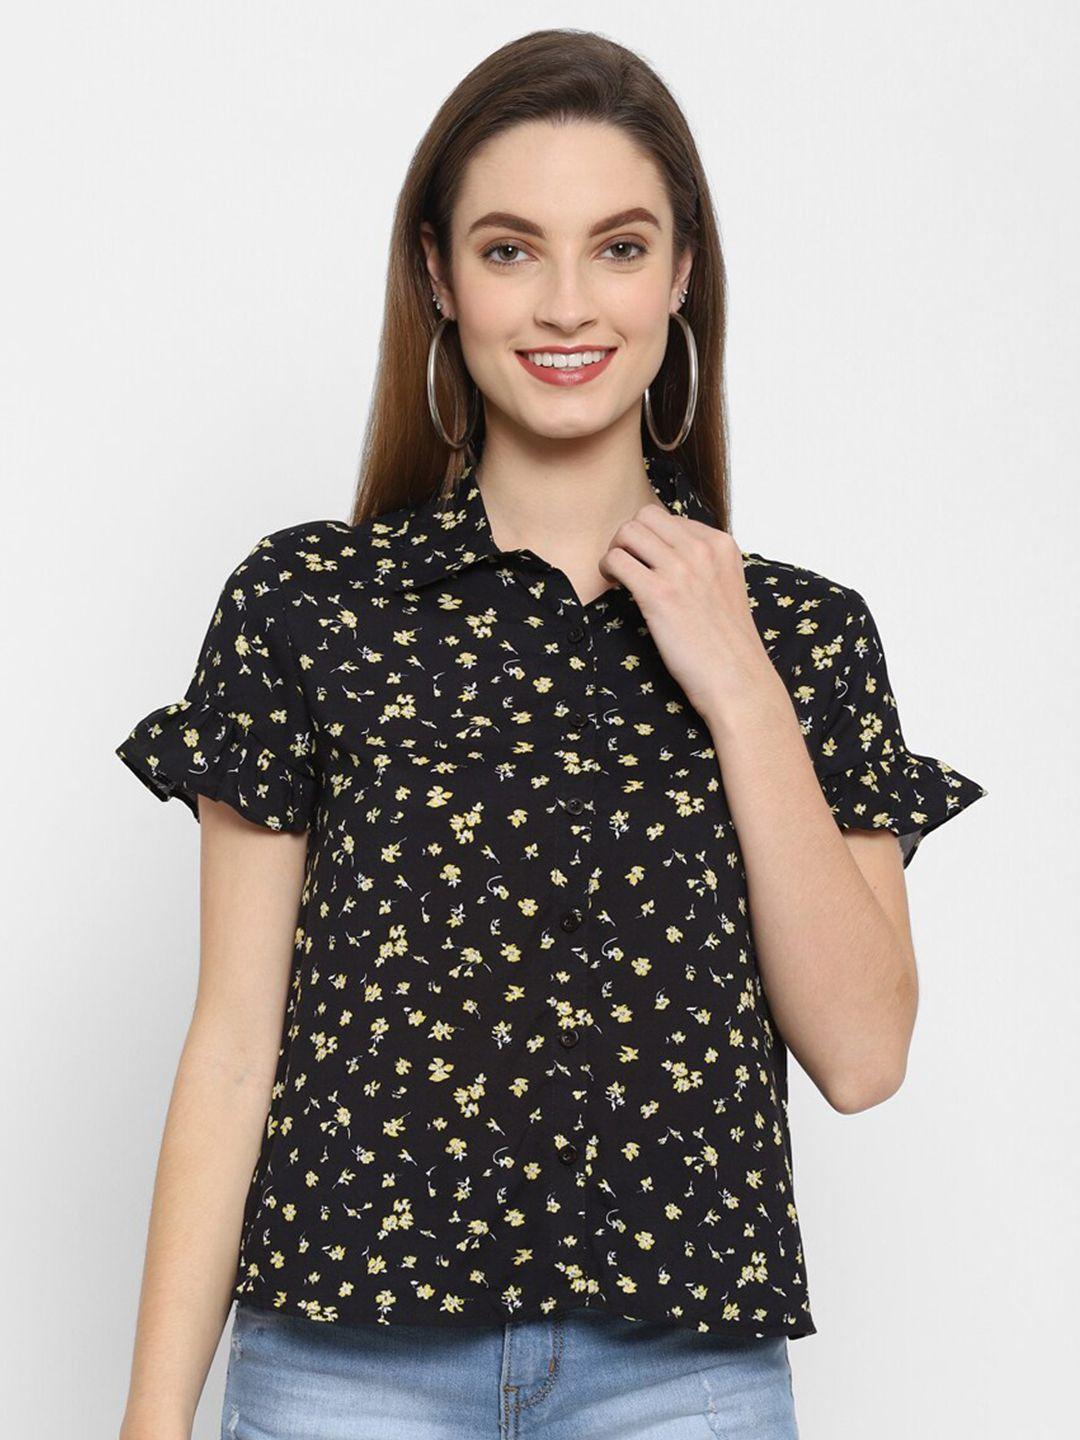 valbone women black & yellow floral printed shirt style viscose rayon top